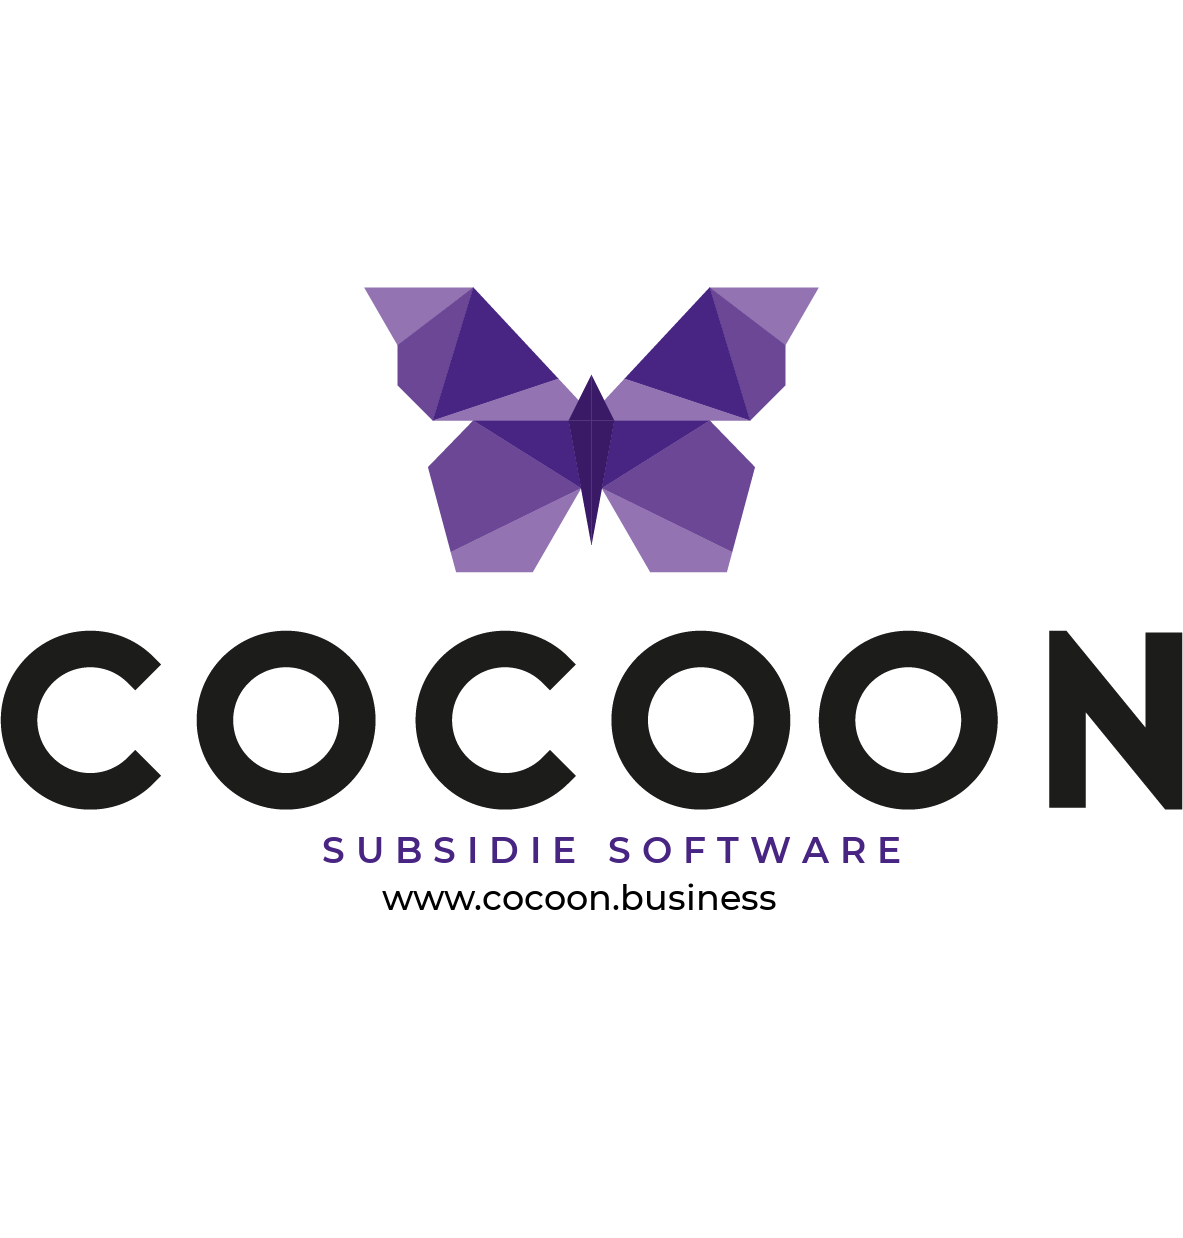 Cocoon Subsidiesoftware